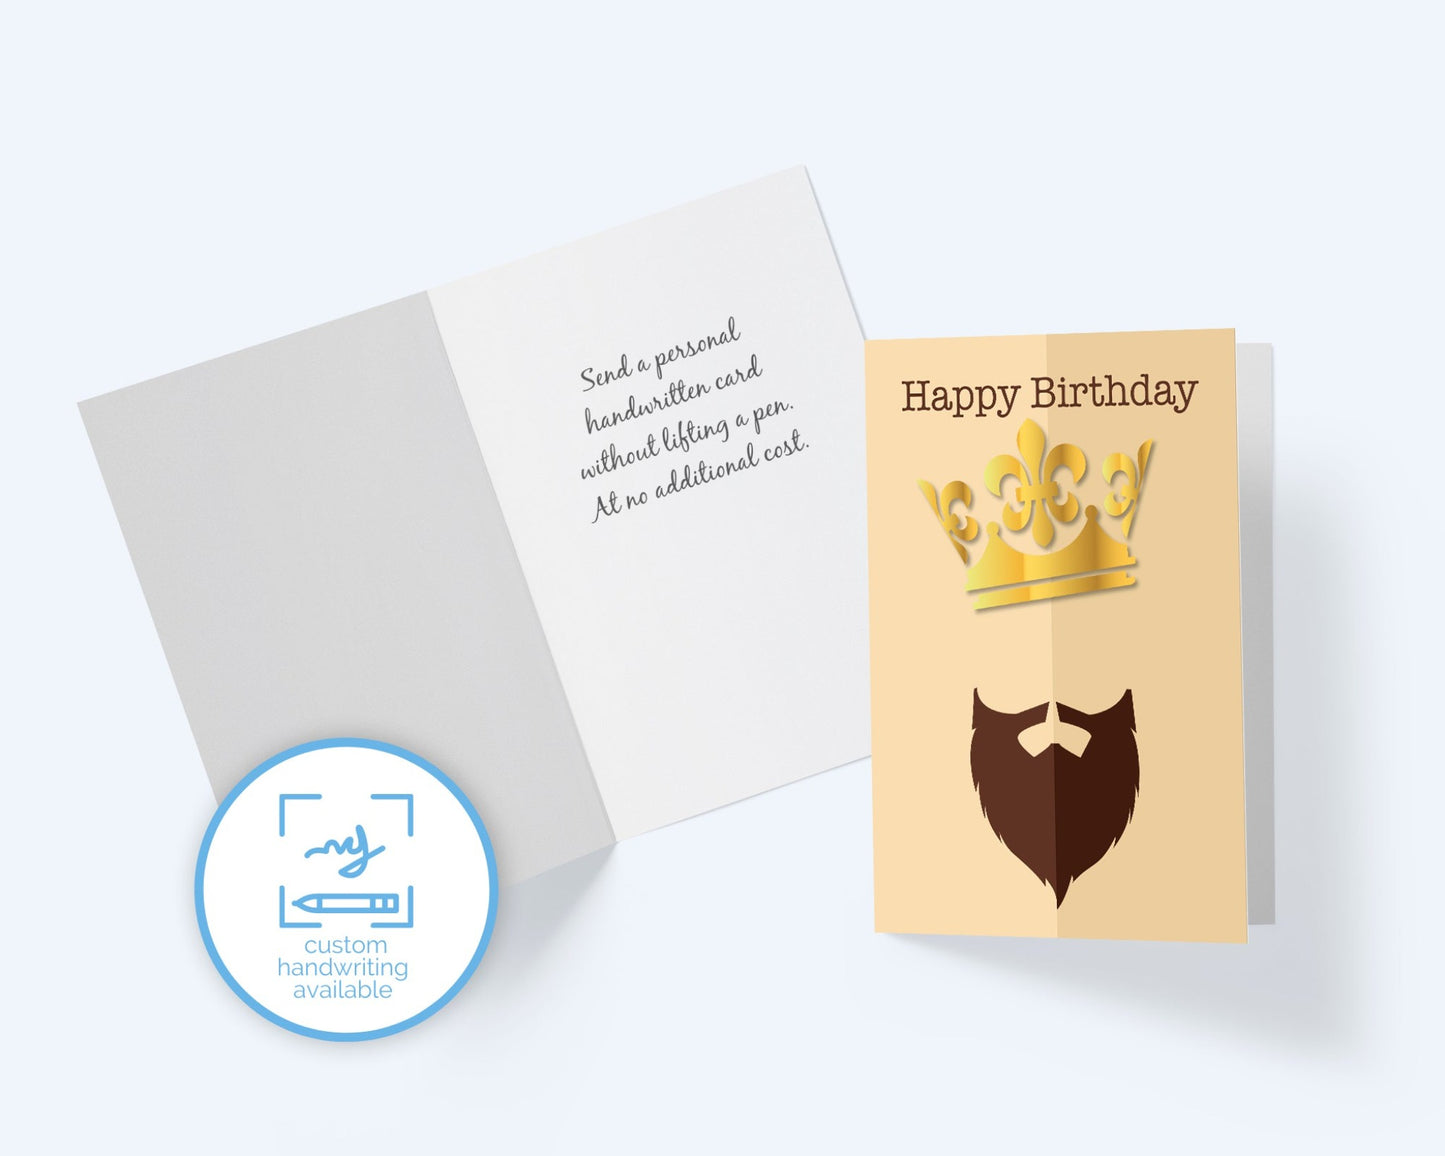 Happy Birthday King - Happy Birthday Greeting Card - King Of Beards